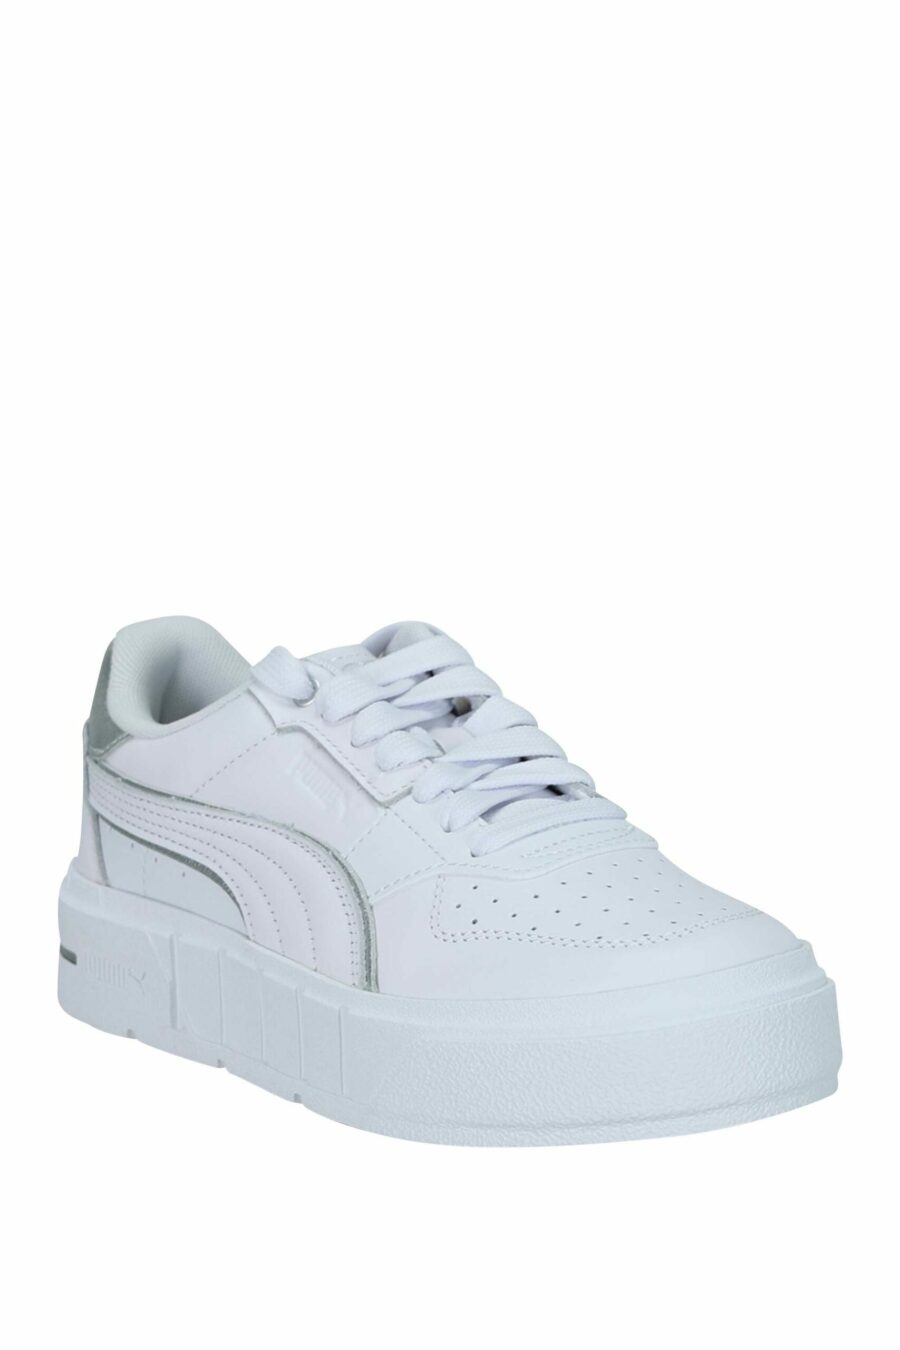 Chaussures blanches et argentées "cali court" - 4065454895660 1 scaled